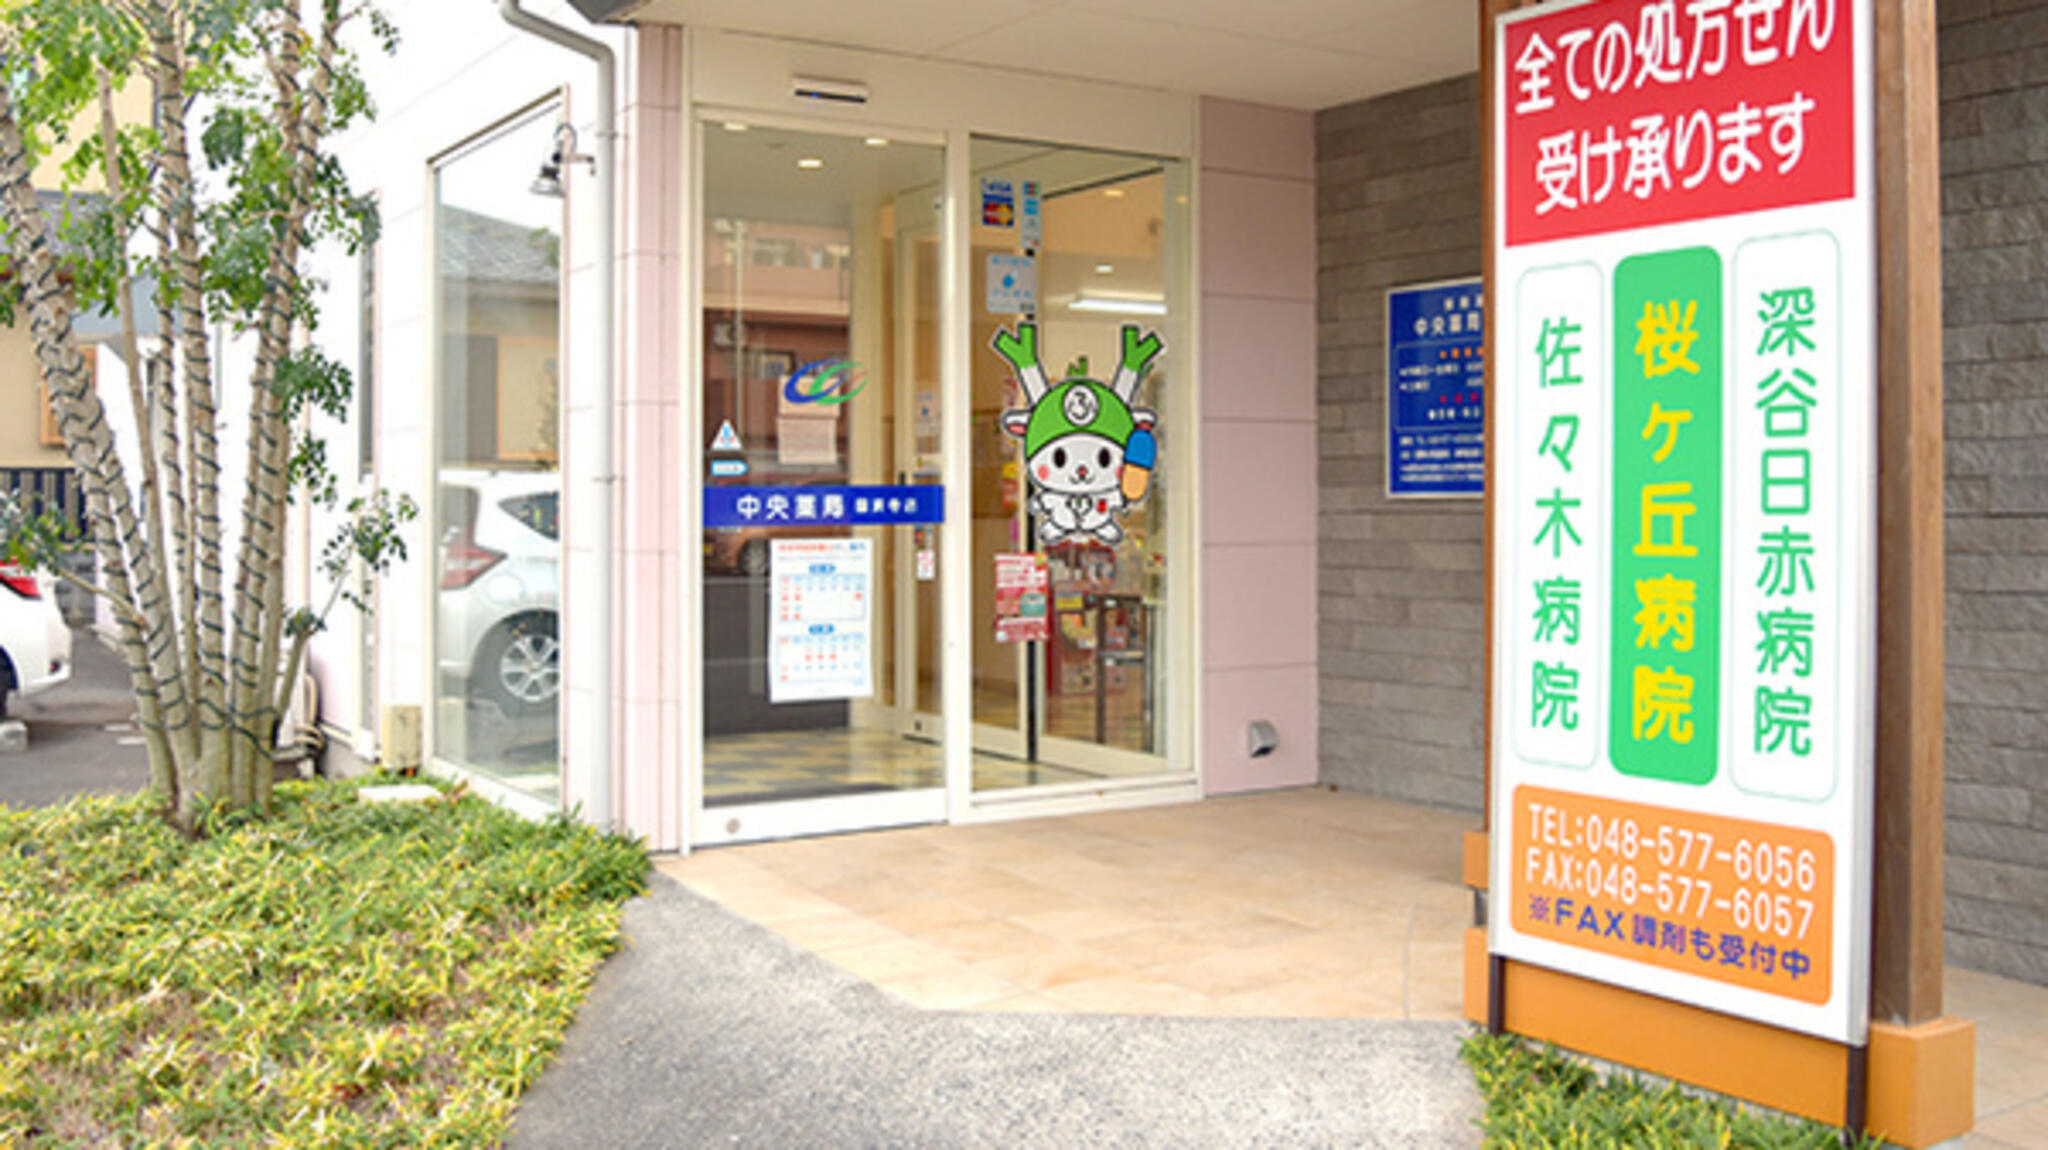 中央薬局 国済寺店の代表写真3